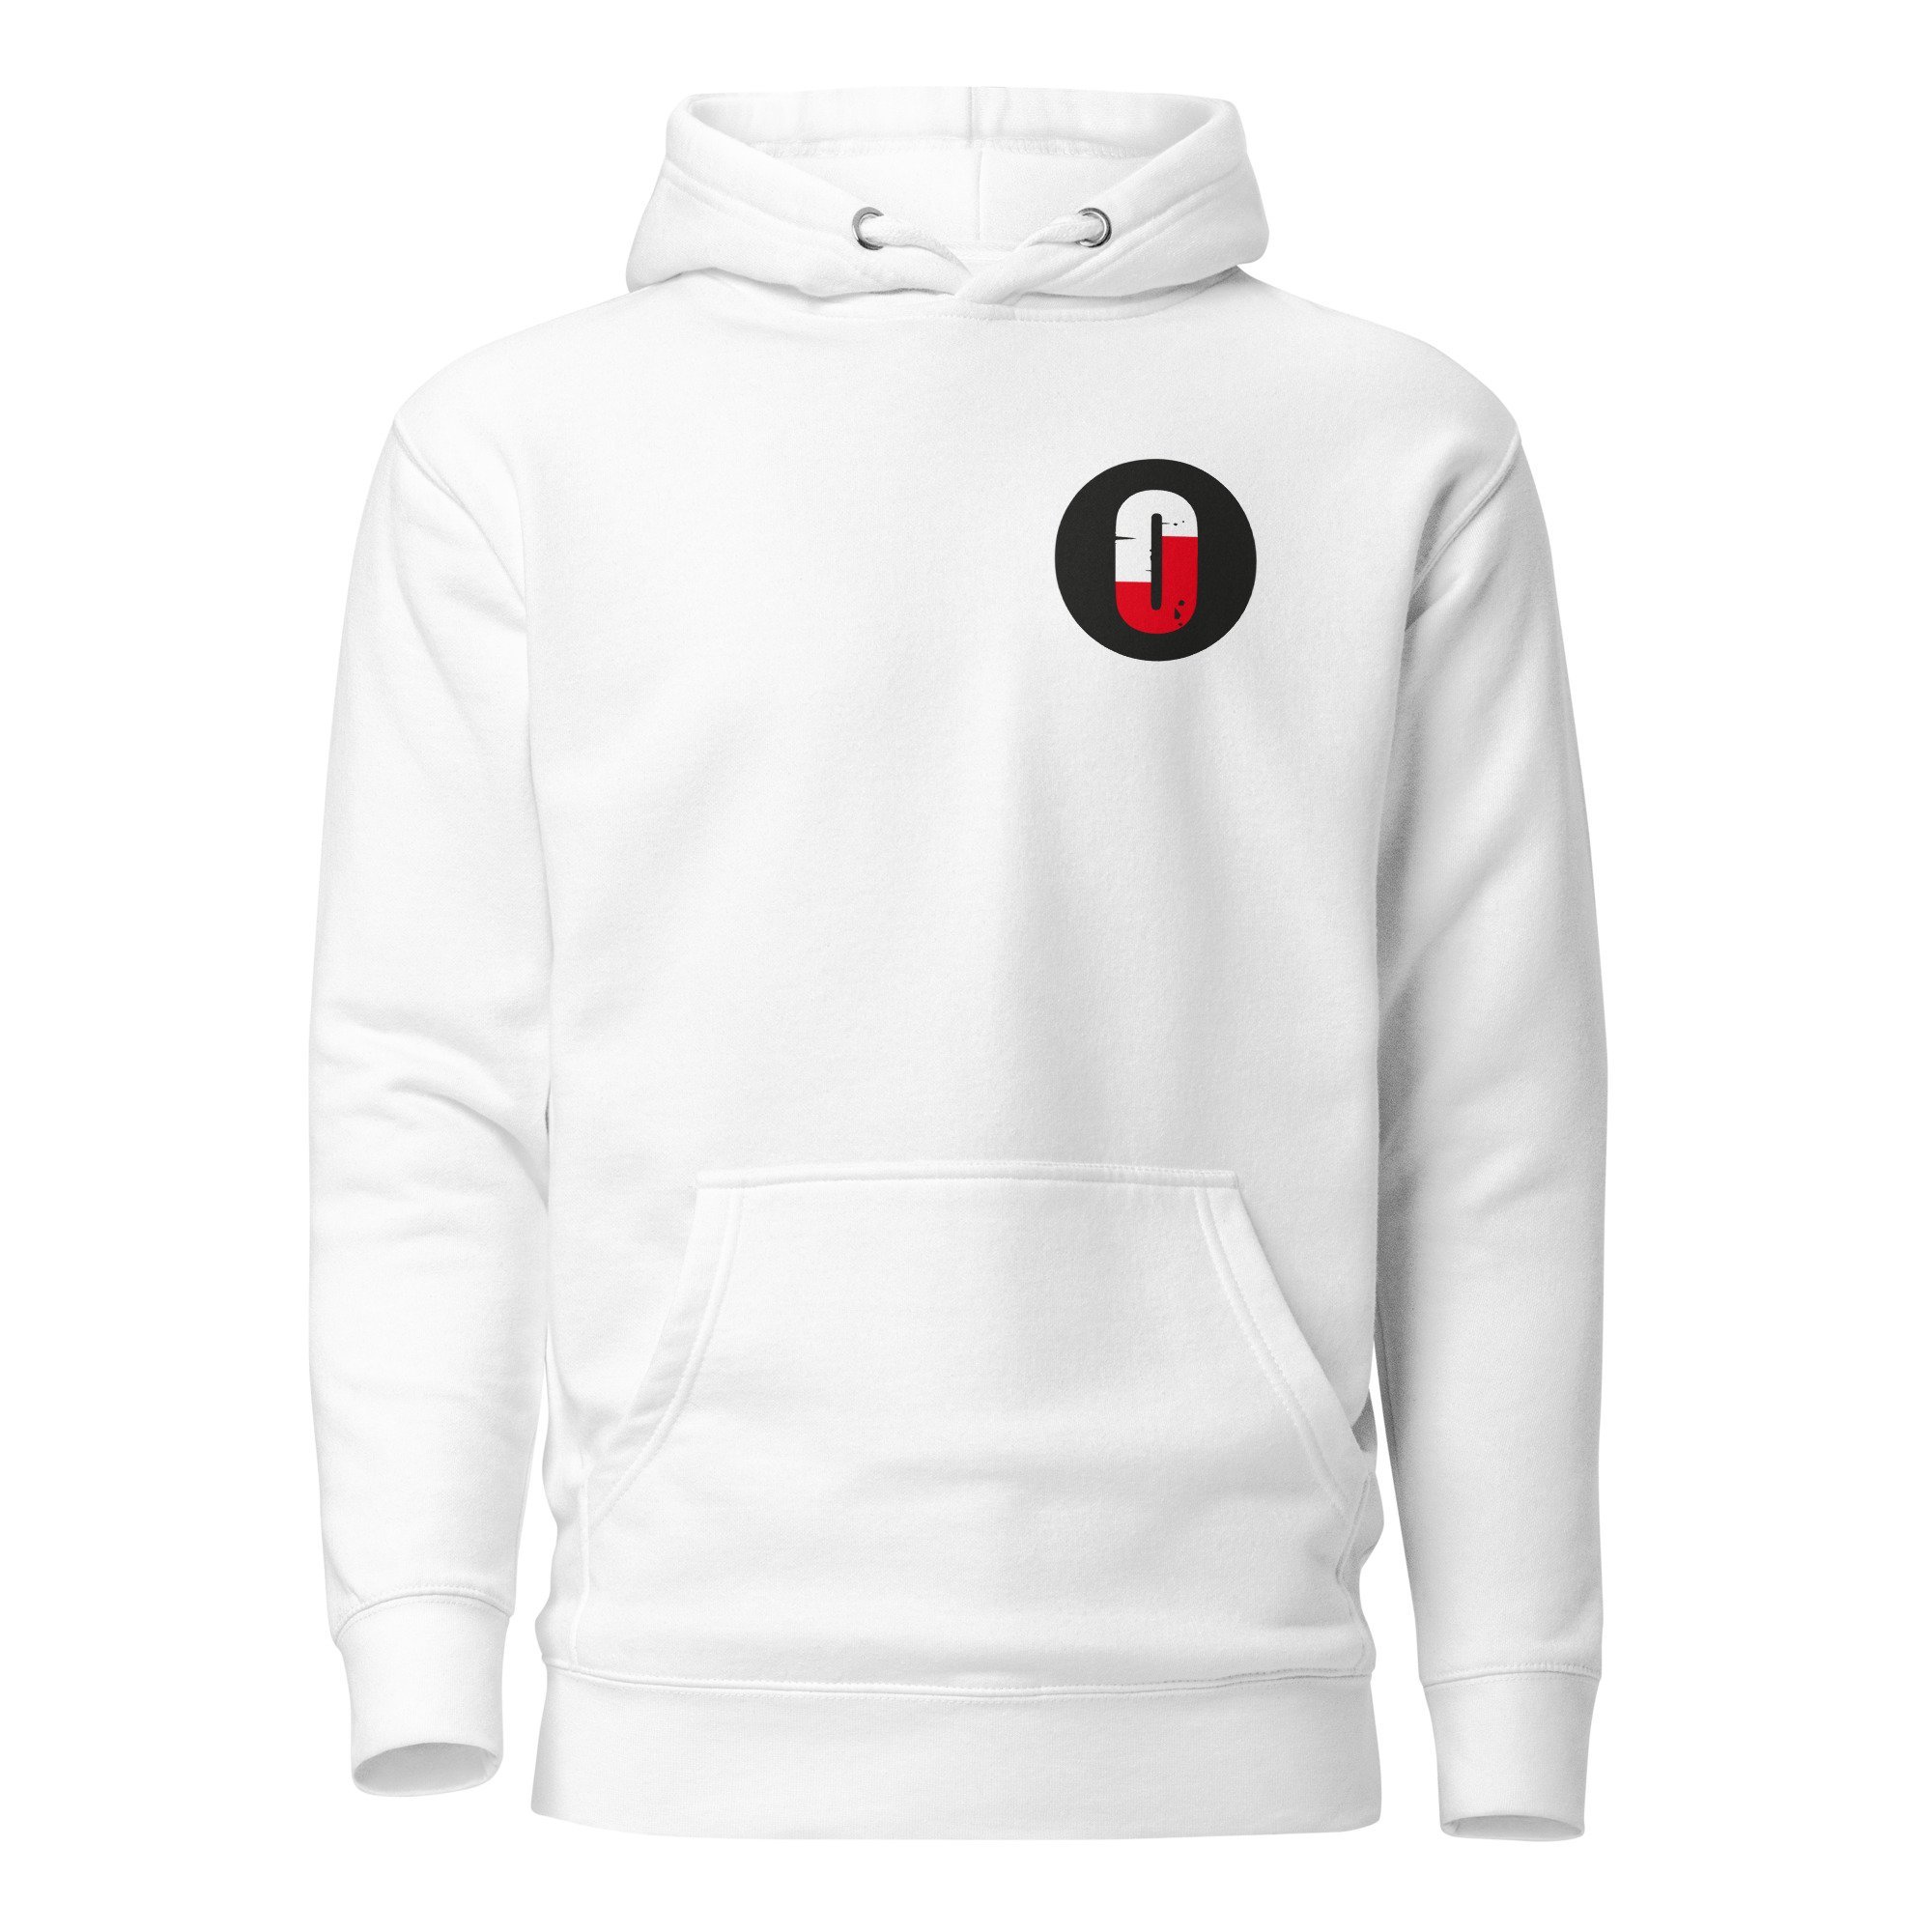 unisex-premium-hoodie-white-front-6361e8850ca6b.jpg